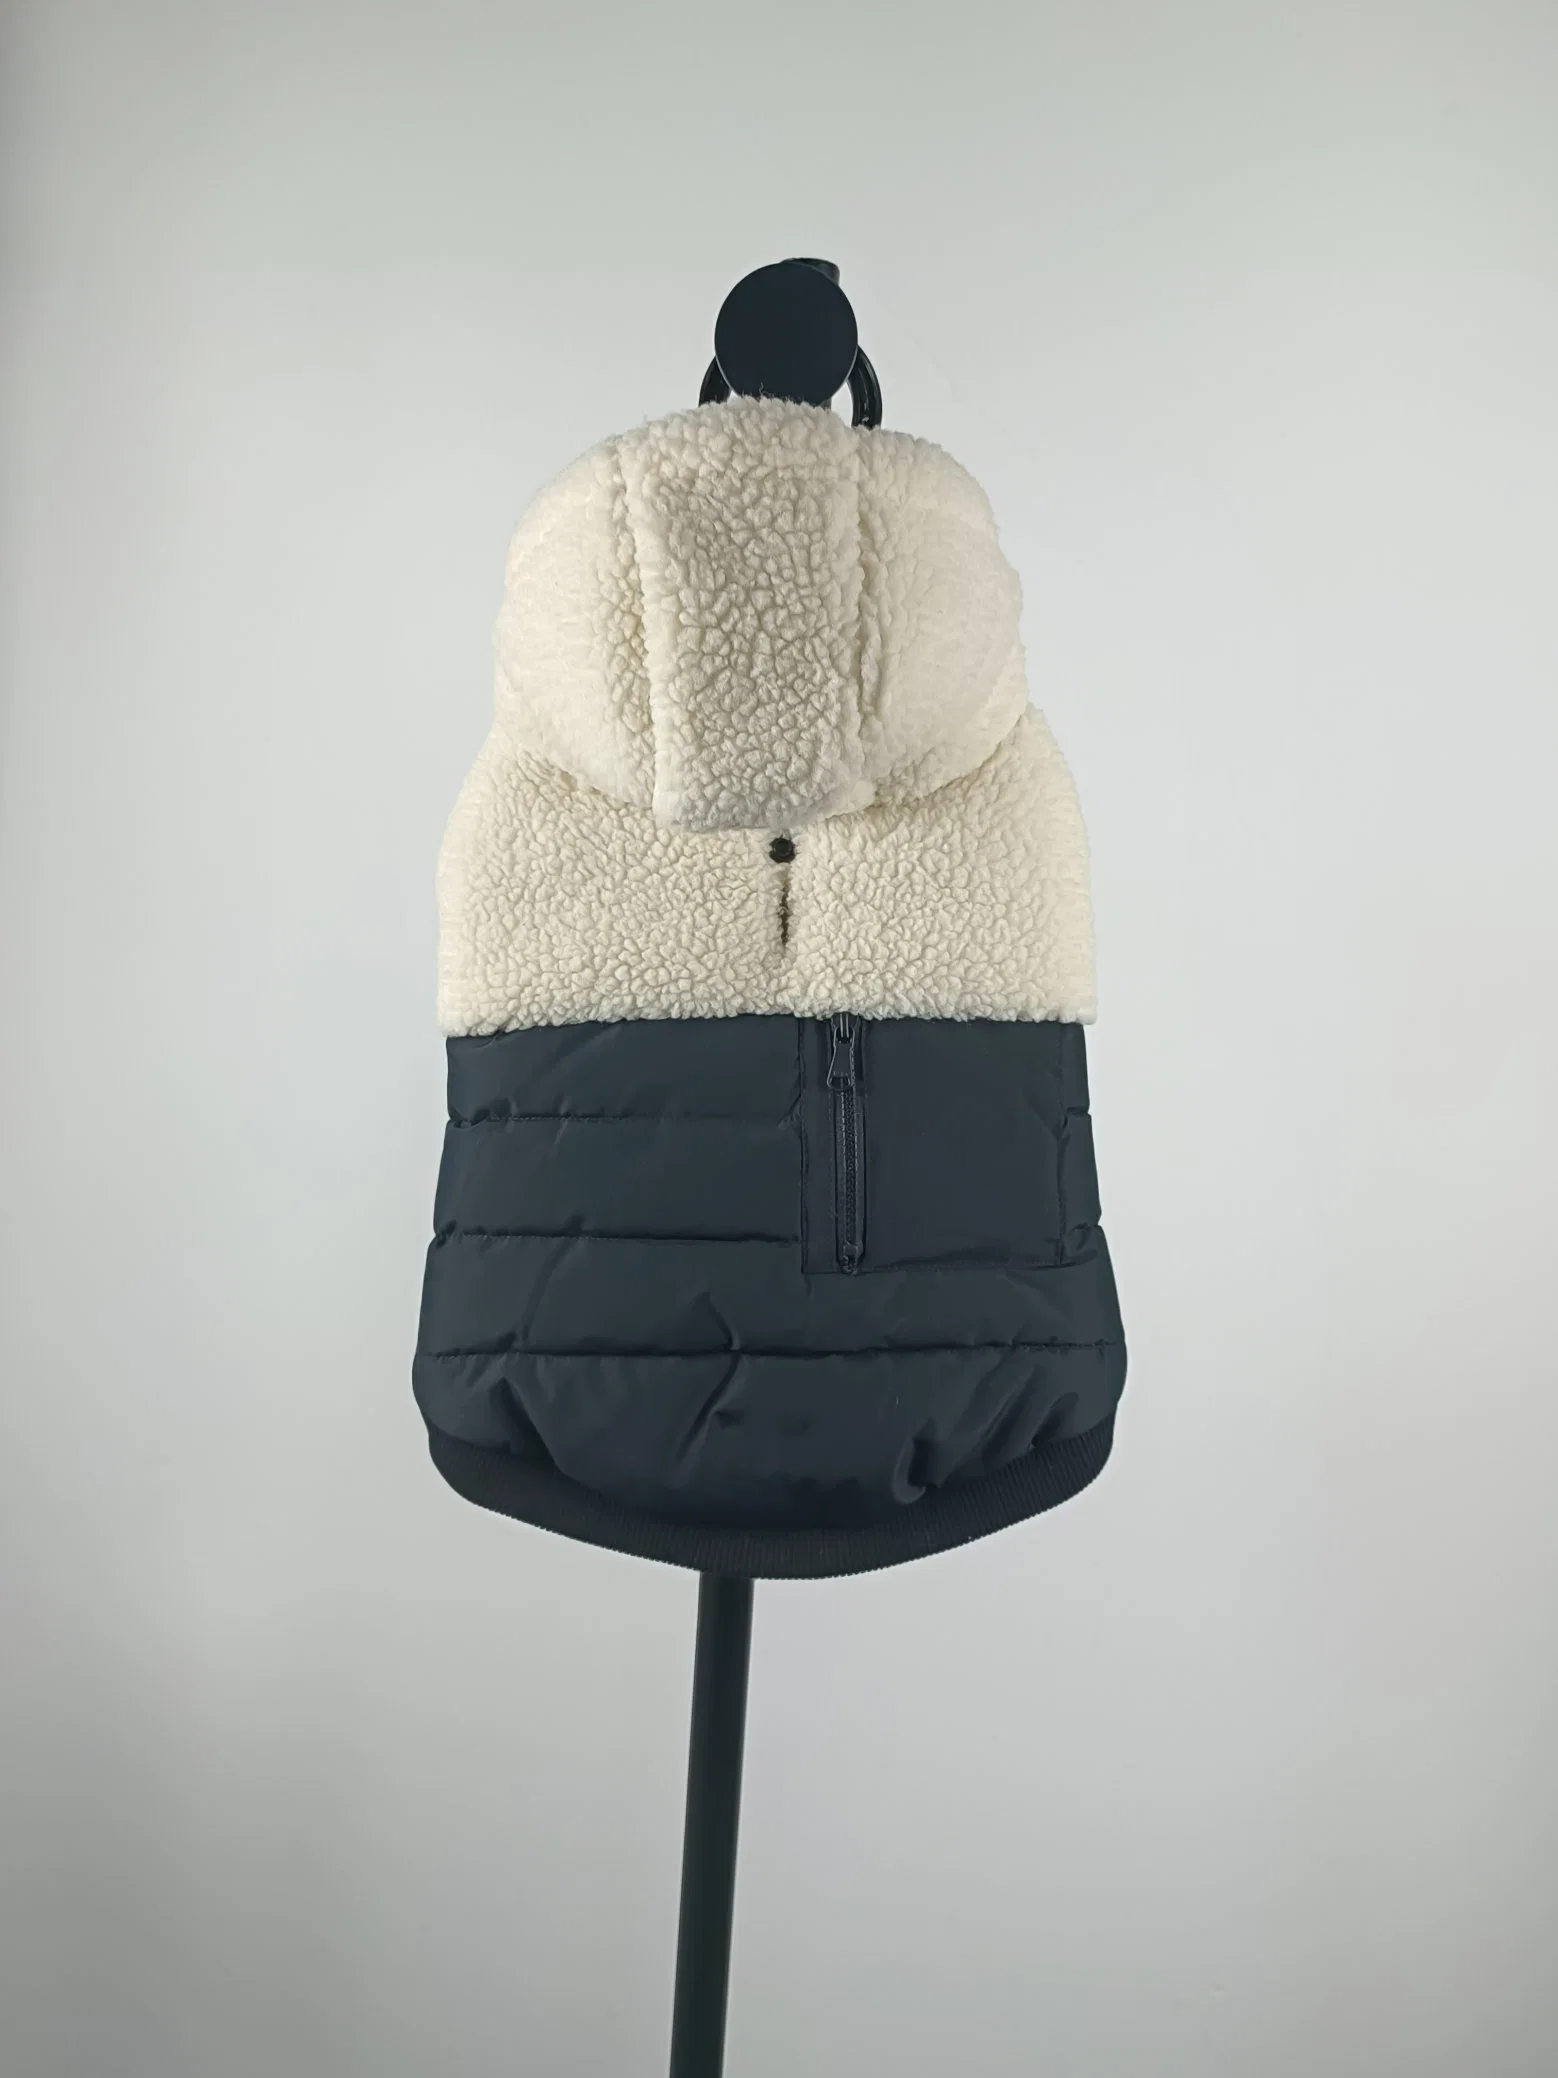 Fleece Hooded Warm Garment Fashion Dog Pet Products Jacket Clothes